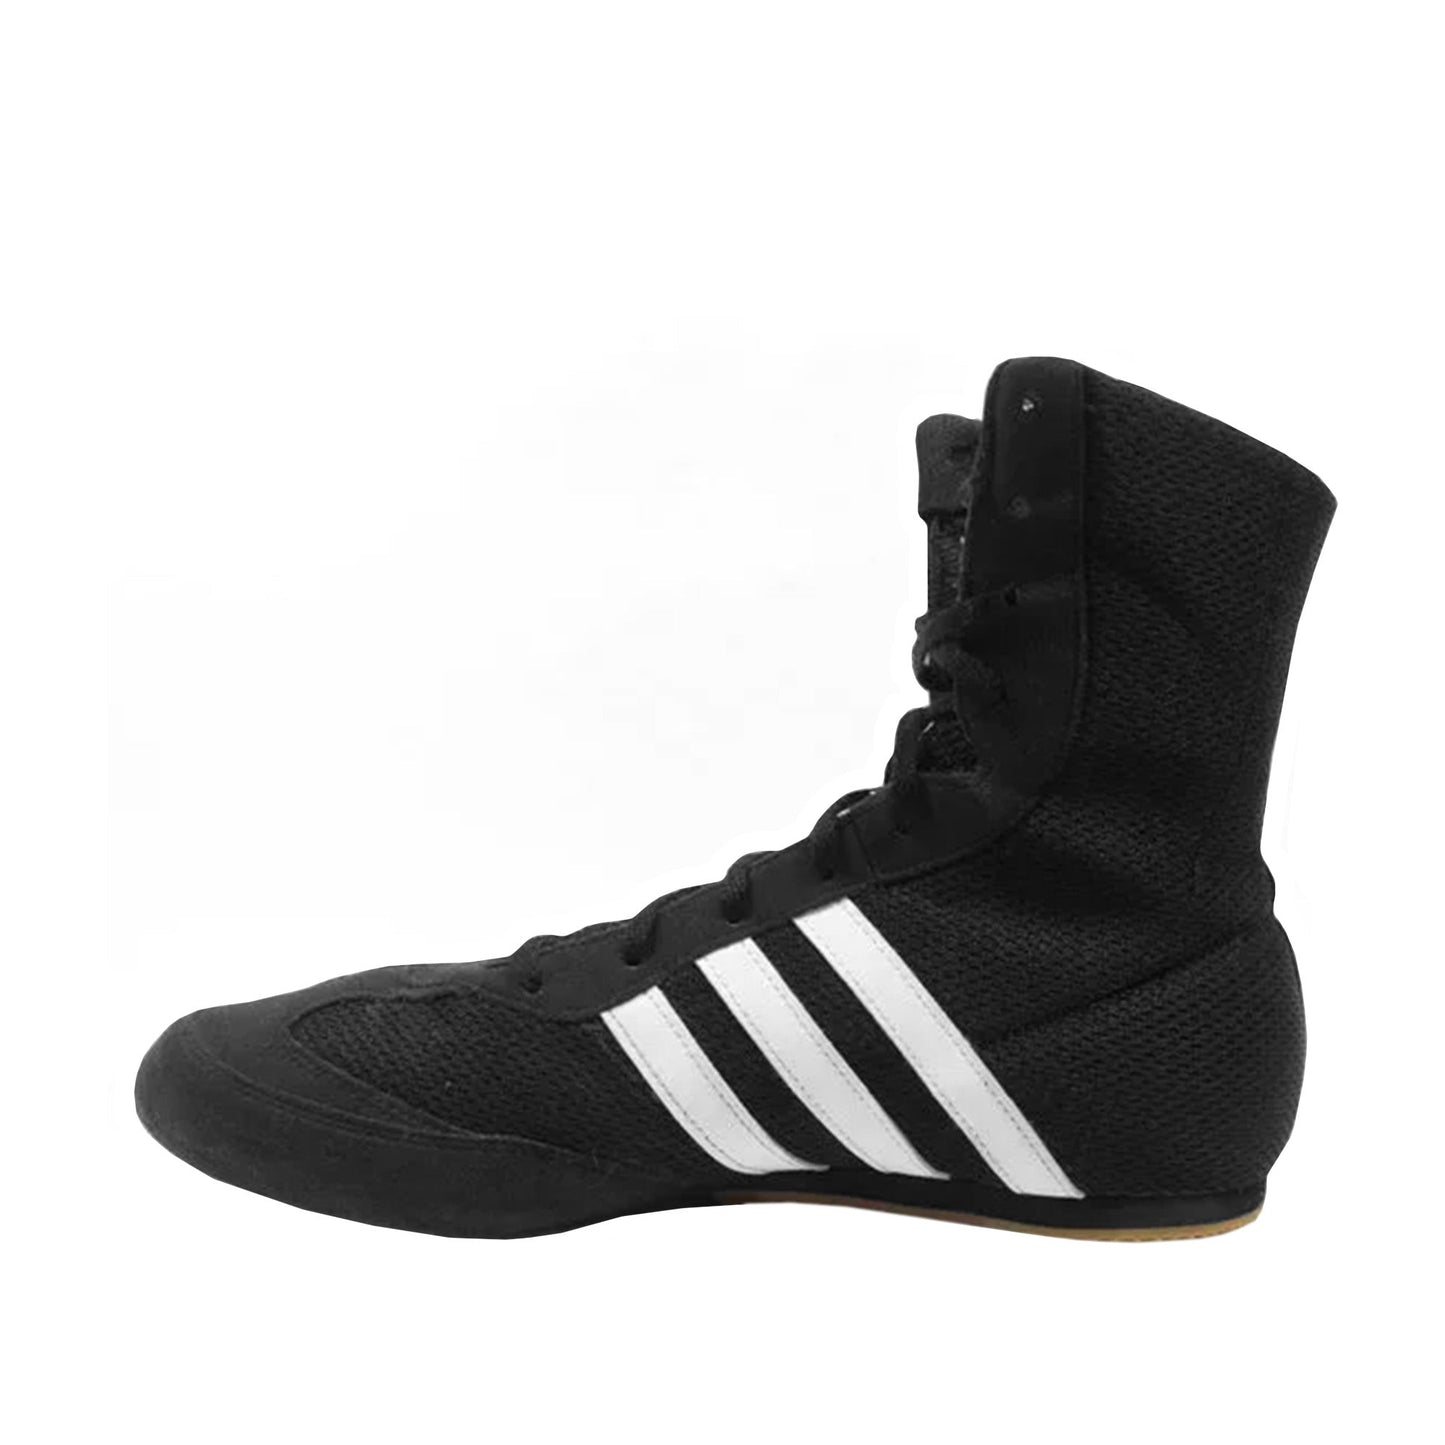 Adidas boxing shoes Box hog-Boxing shoes-Adidas®-4-Canada Fighting